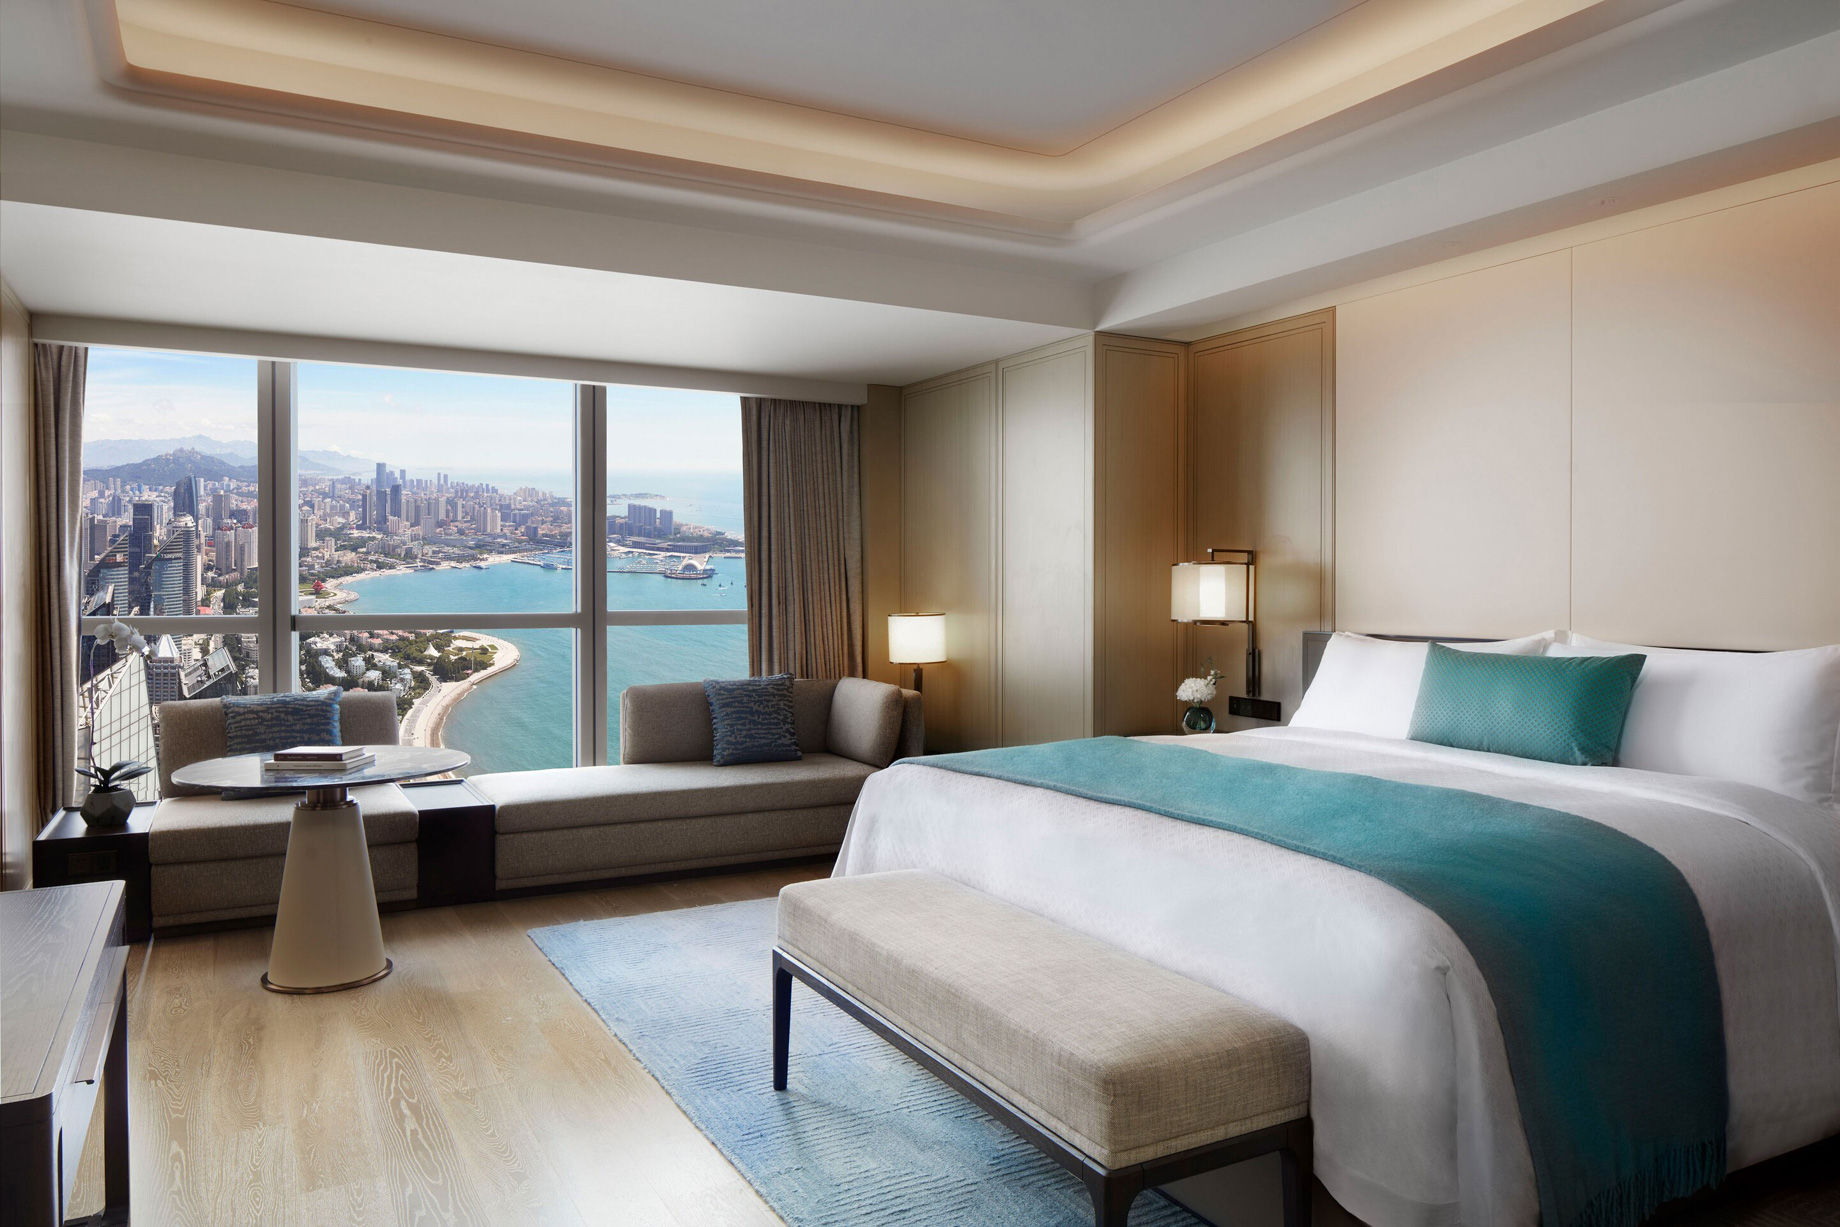 The St. Regis Qingdao Hotel - Qingdao, Shandong, China - Grand Ocean View King Guest Room